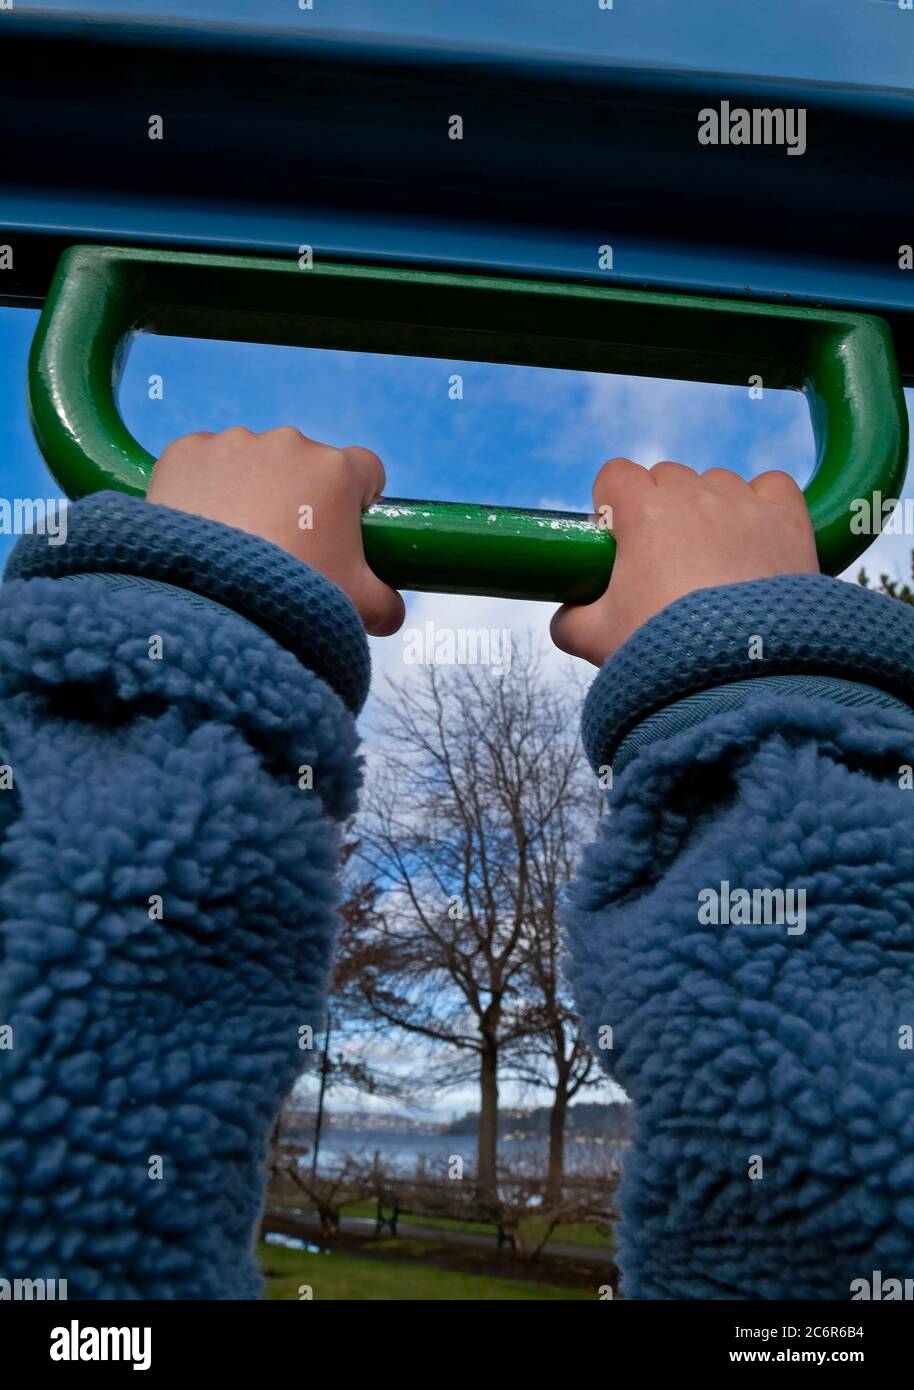 Close-up of child’s hands on playground equipment. Stock Photo